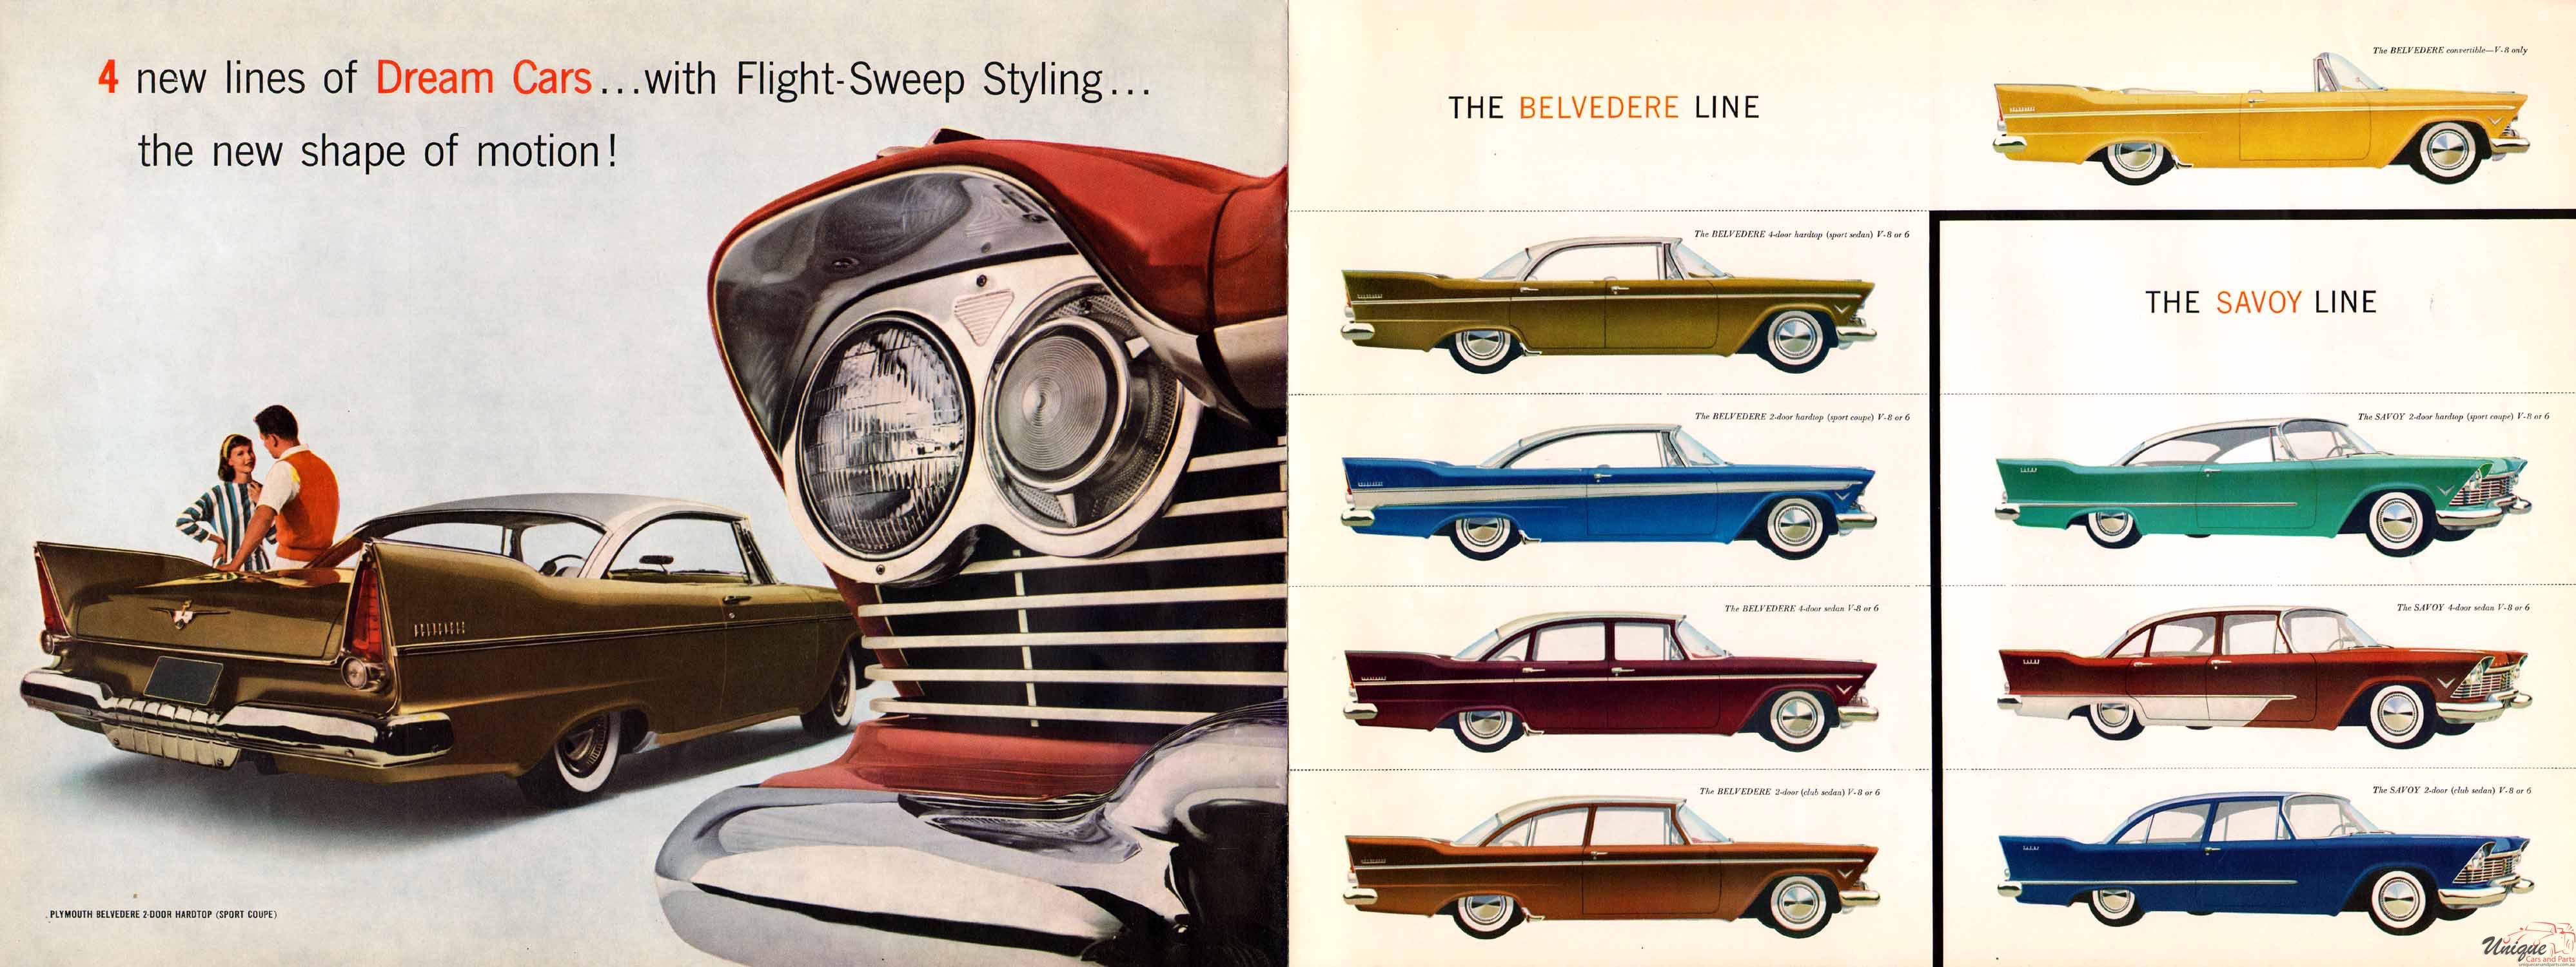 1957 Plymouth Prestige Brochure Page 3